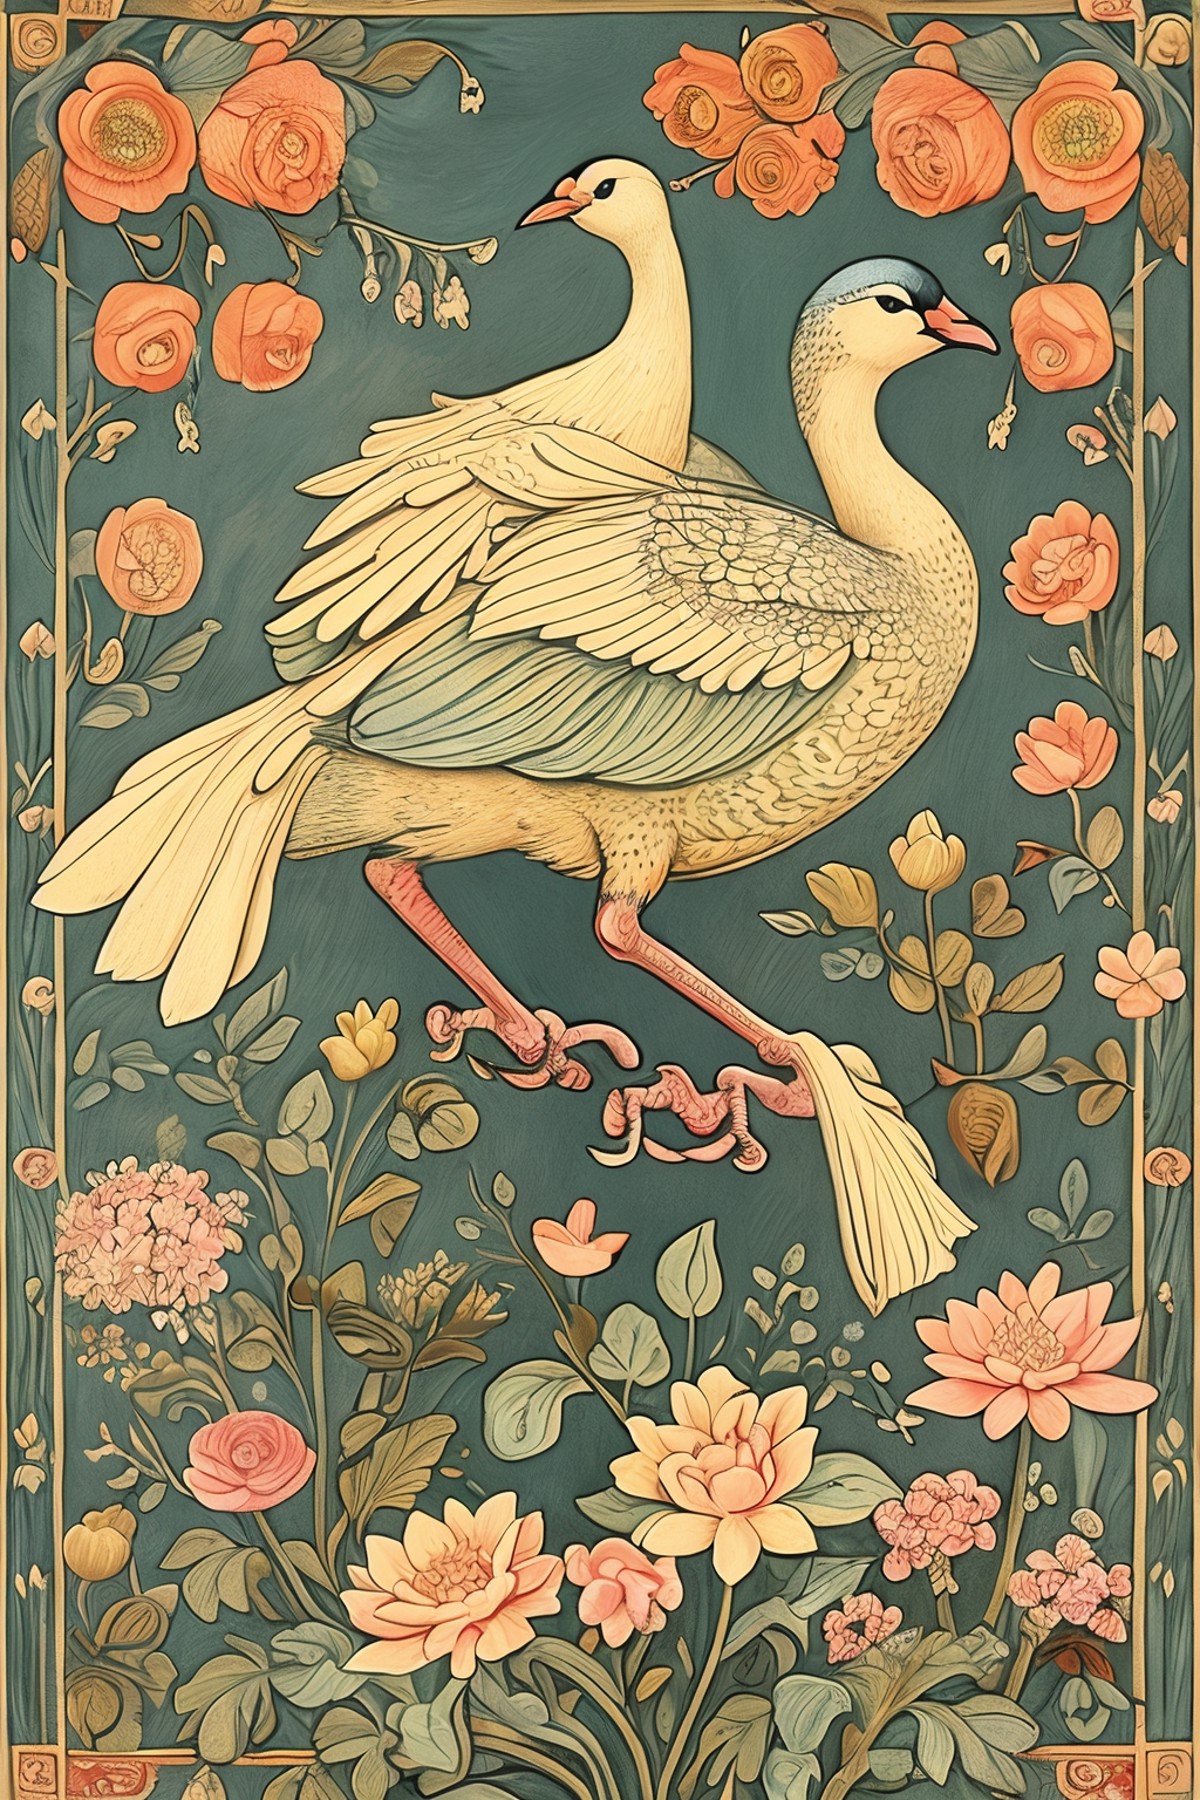 masterpiece,best quality,<lora:tbh132-:0.8>,patten,birds,flower,illustration,painting,style of Walter Crane,